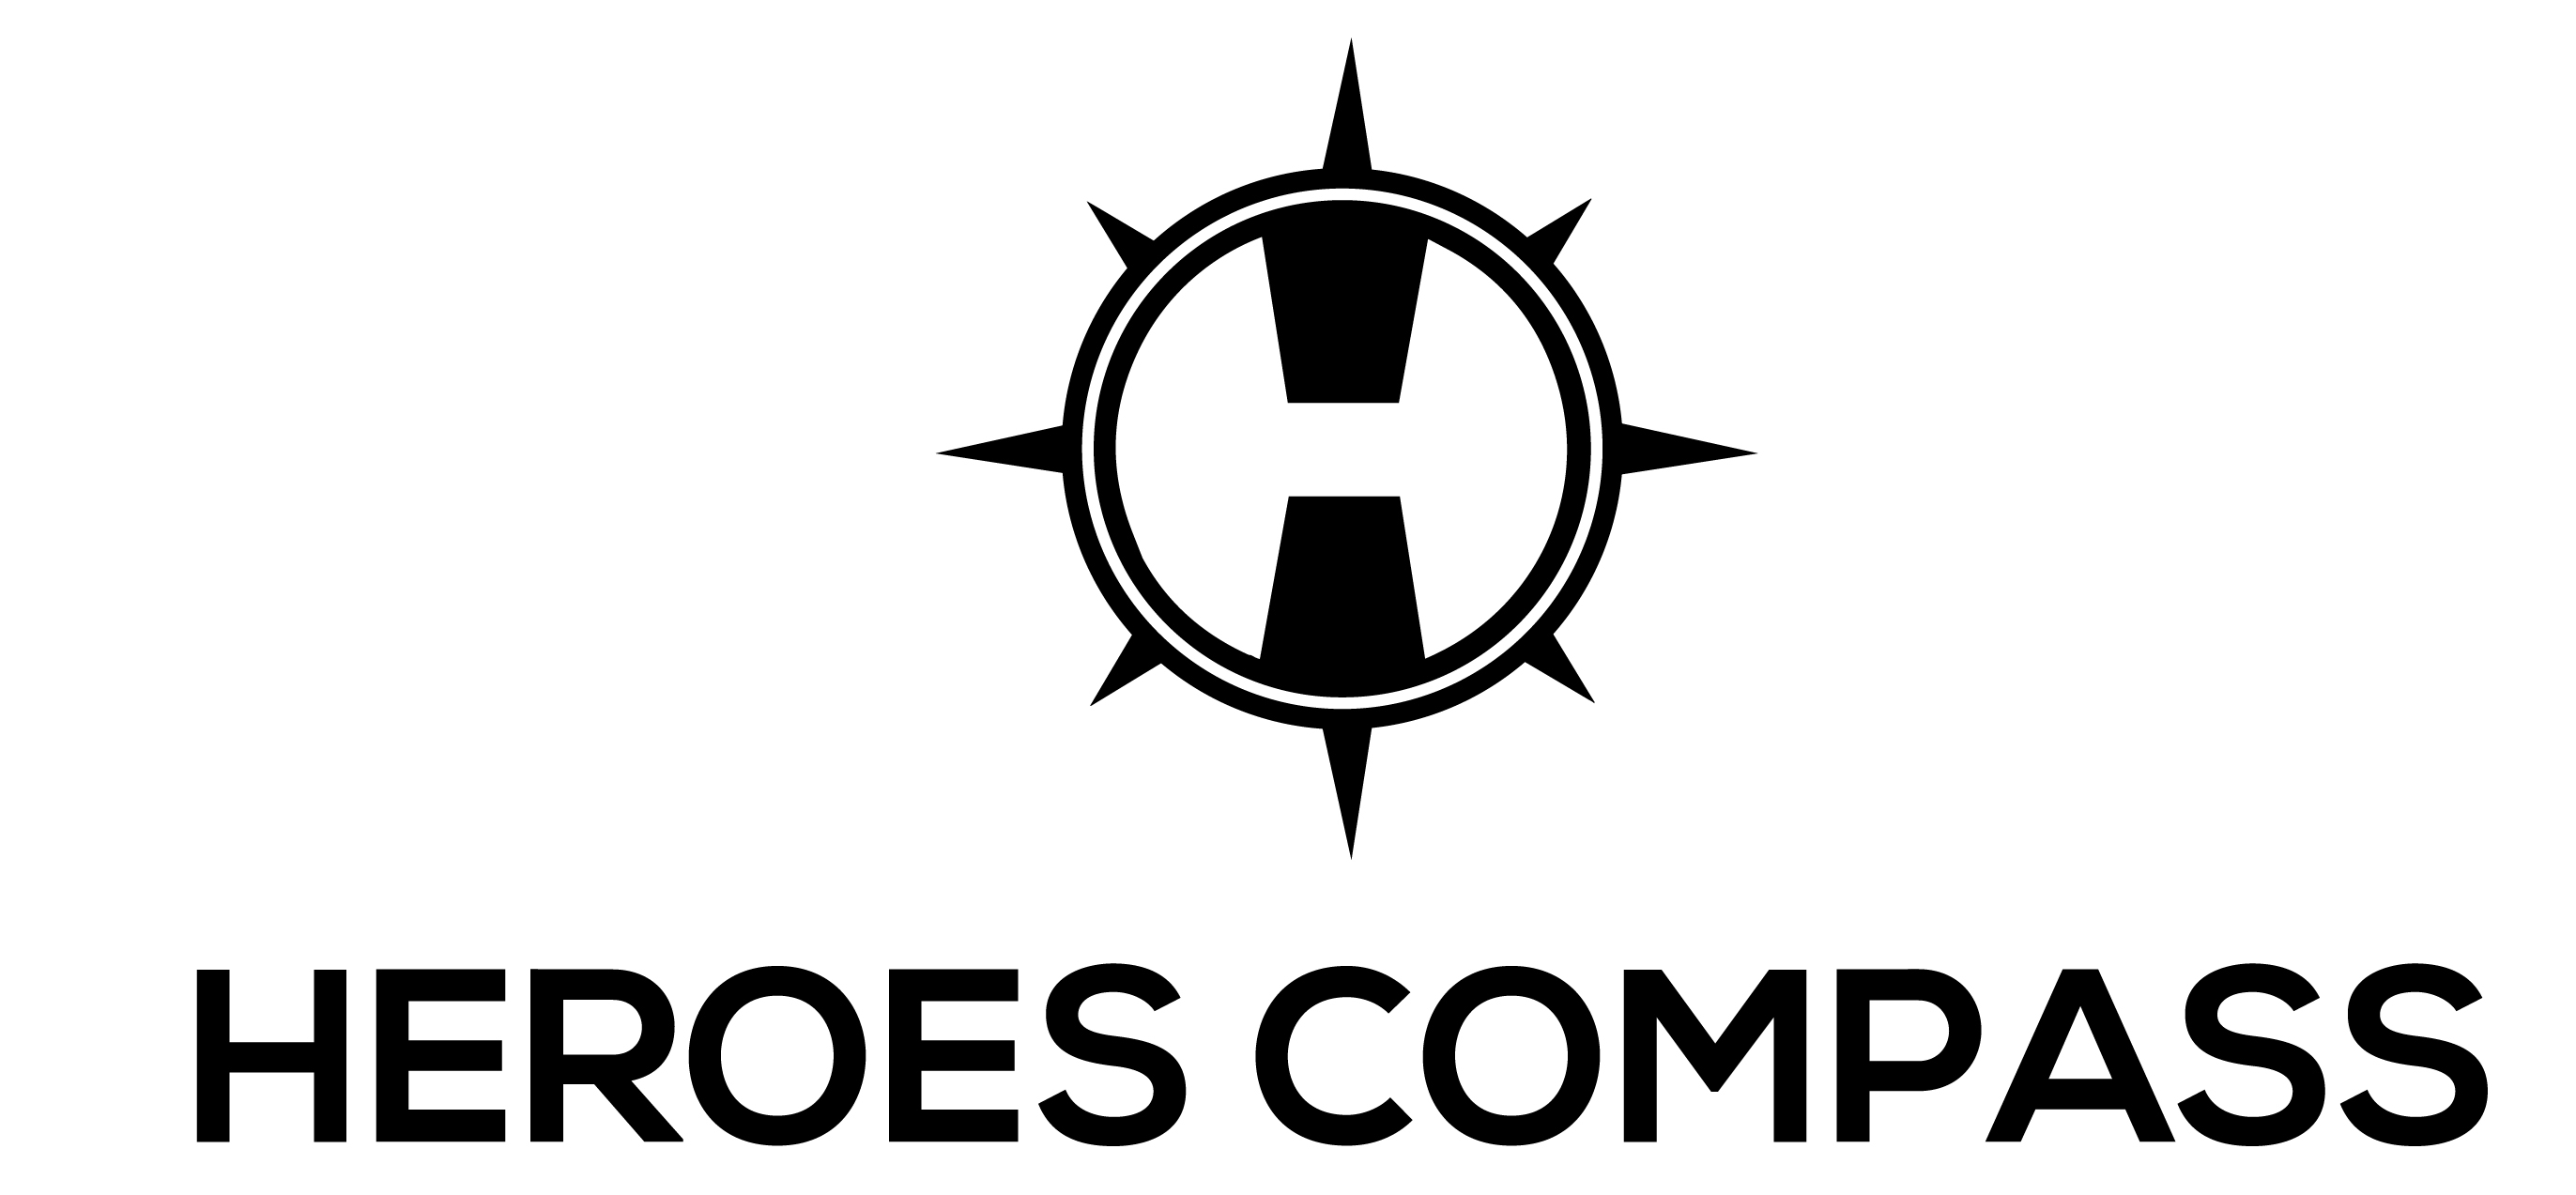 Heroes Compass logo